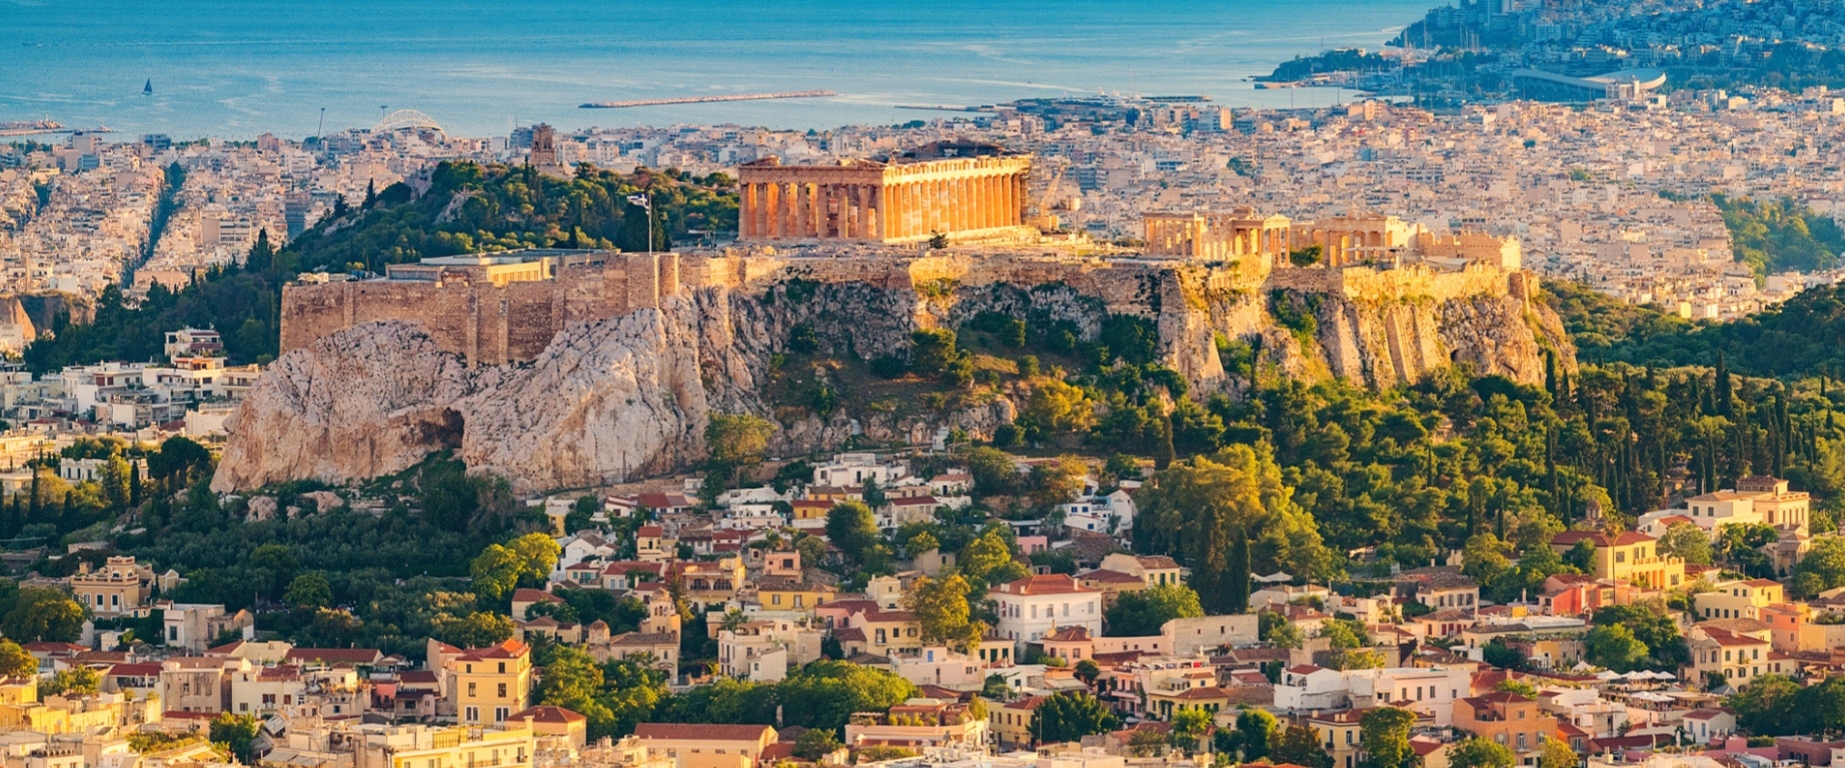 More information about "Γιατί πολεοδομικά και αρχιτεκτονικά η Αθήνα διαφέρει τόσο πολύ από τις υπόλοιπες ευρωπαϊκές πόλεις;"